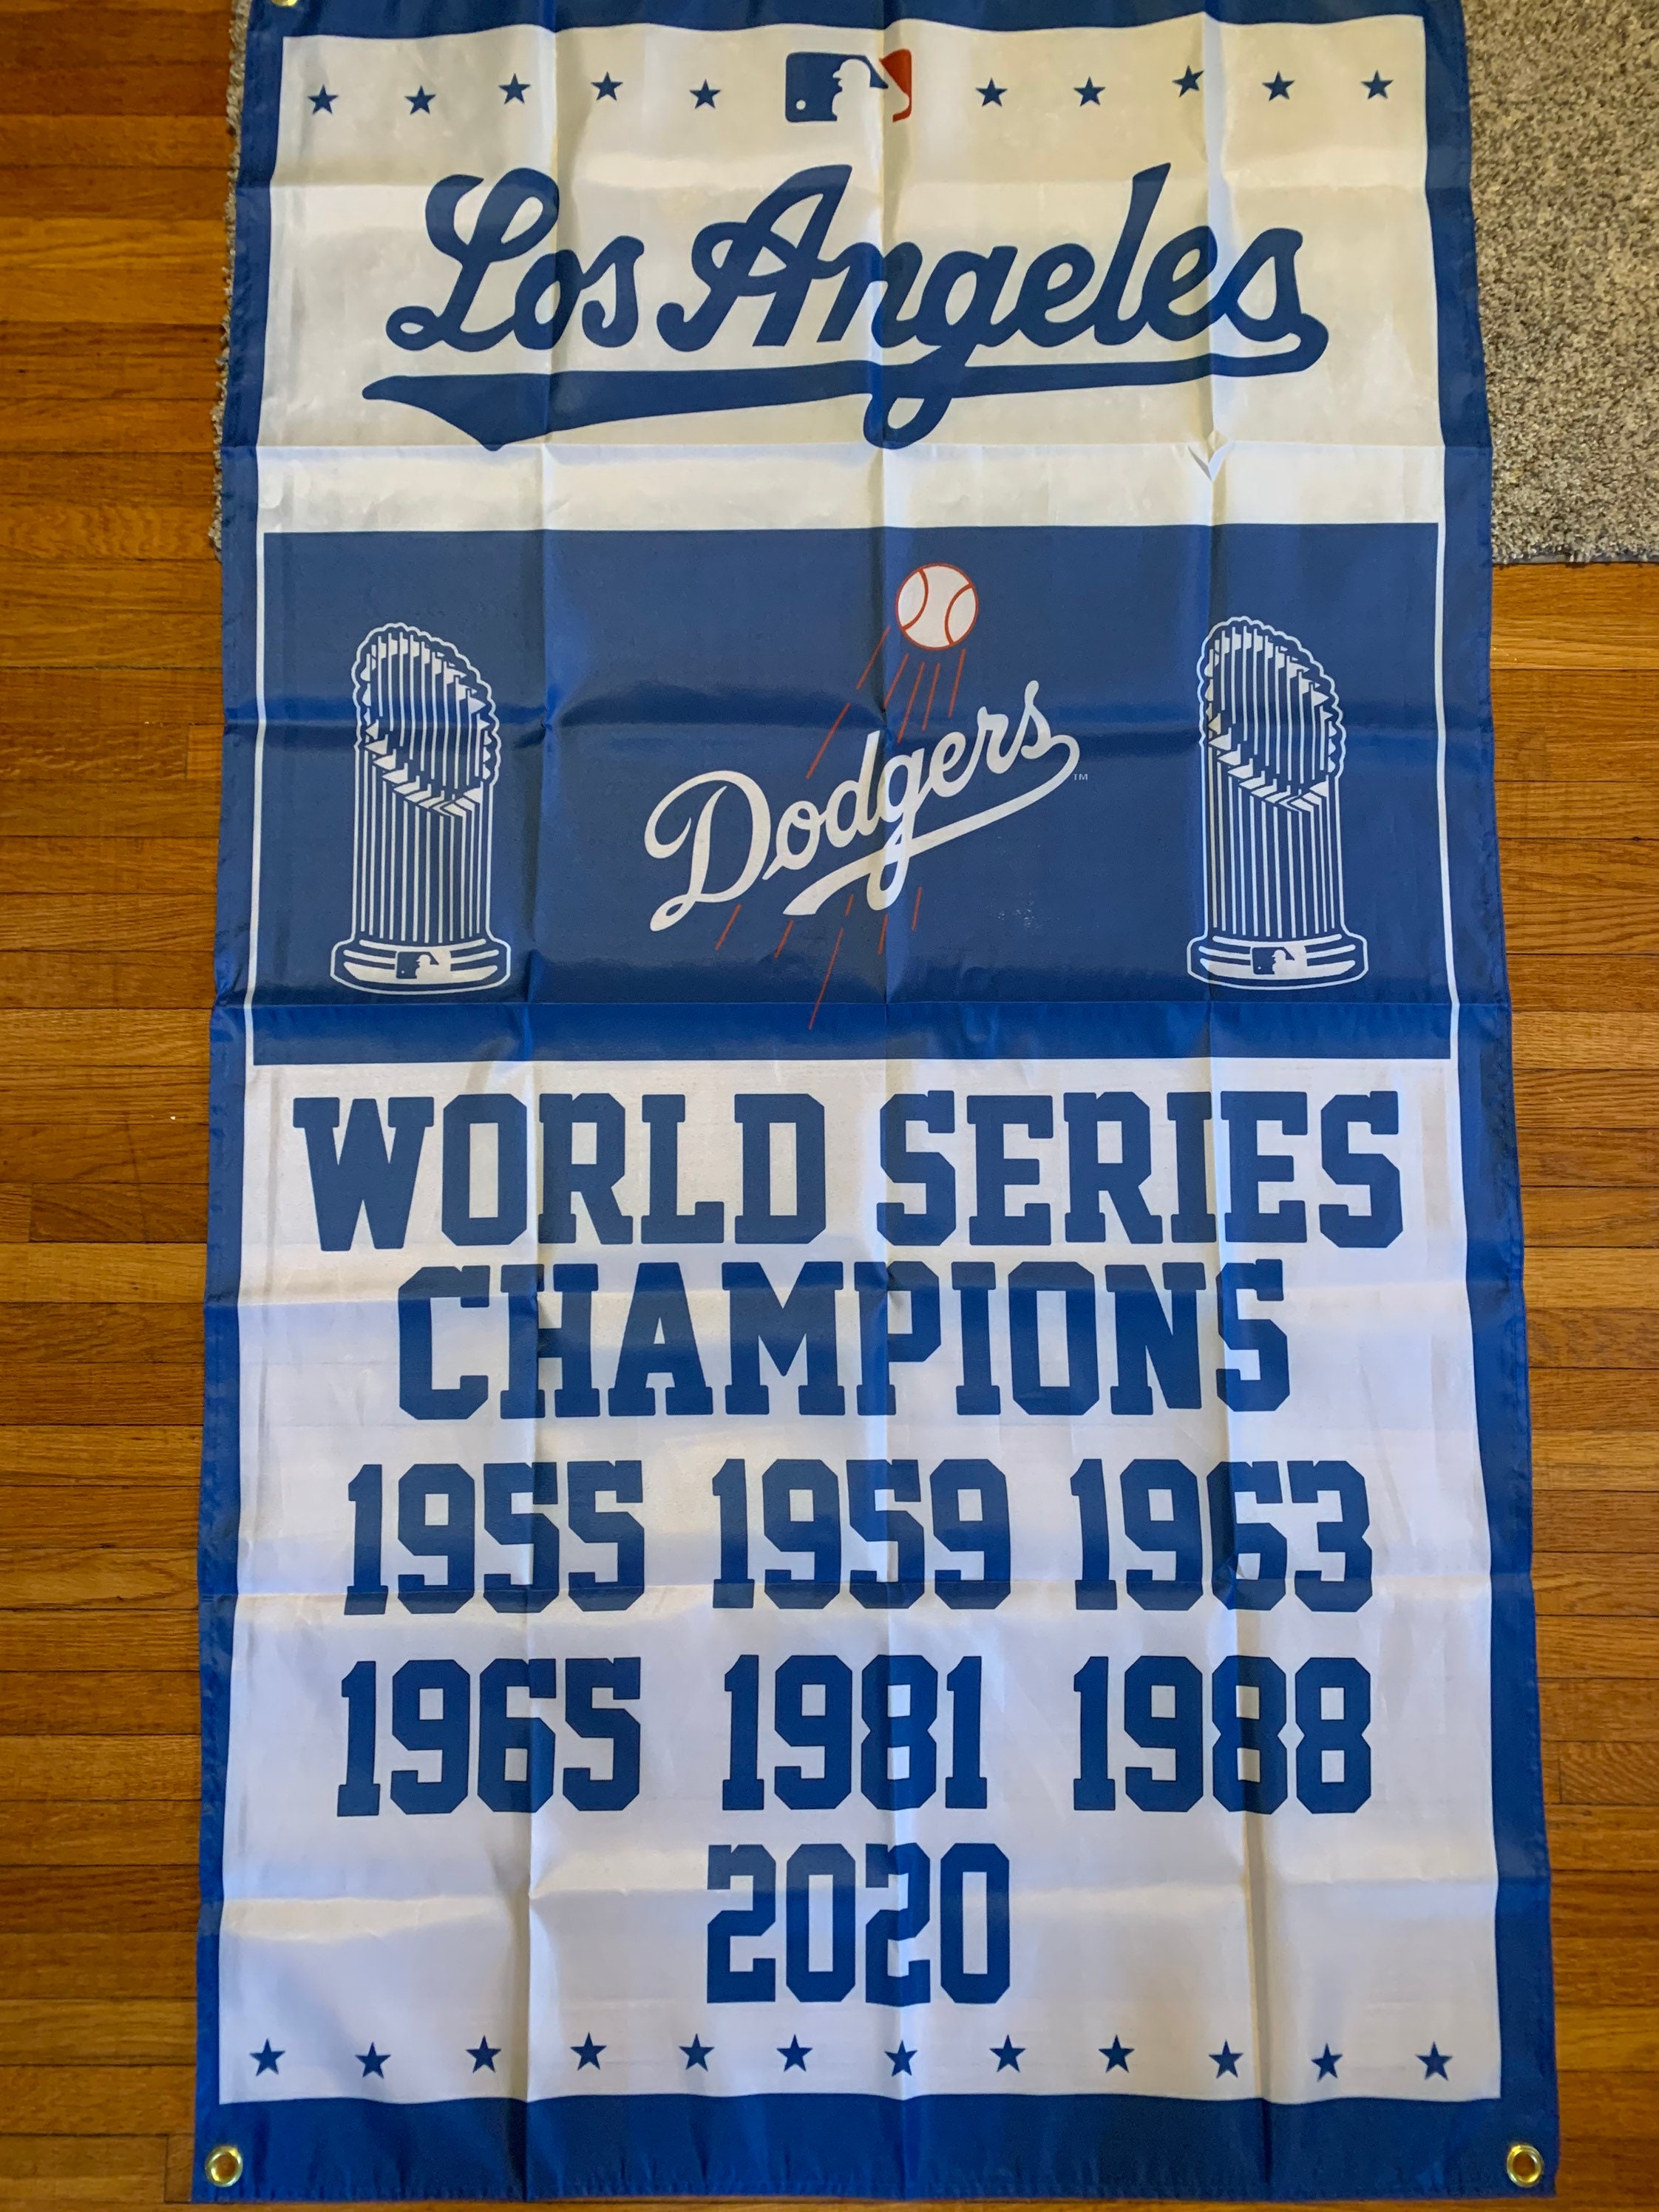 2020 Los Angeles Dodgers World Series Champions Baseball Magazine